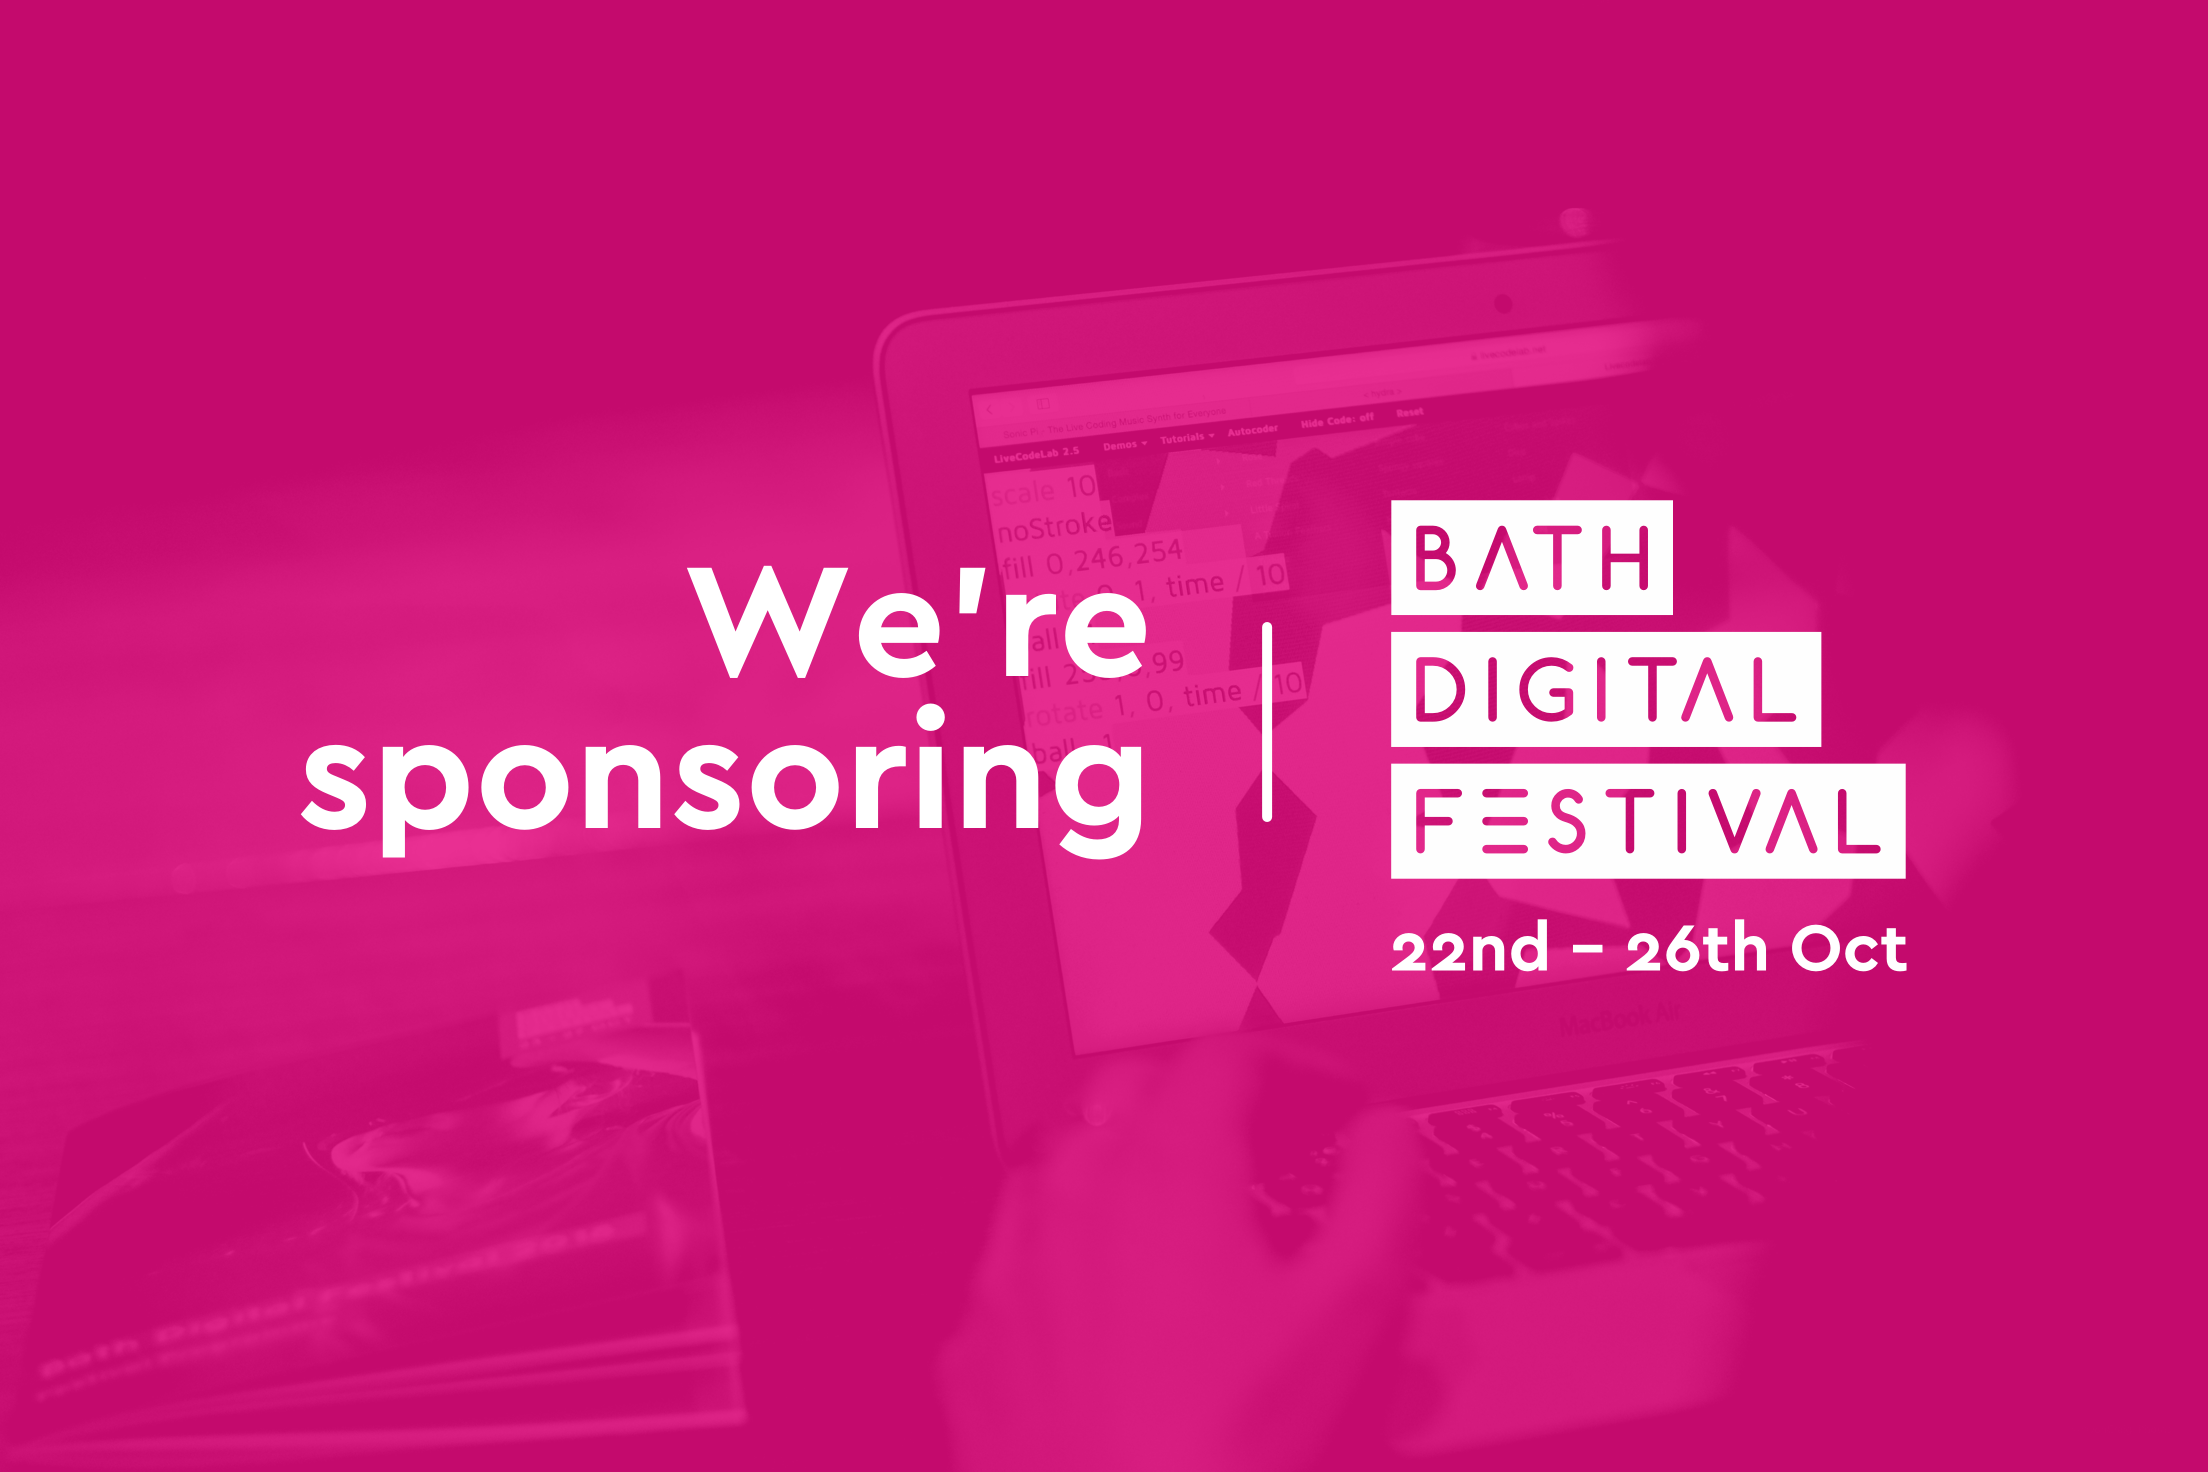 Storm are Bath Digital Festival 2019 category sponsors